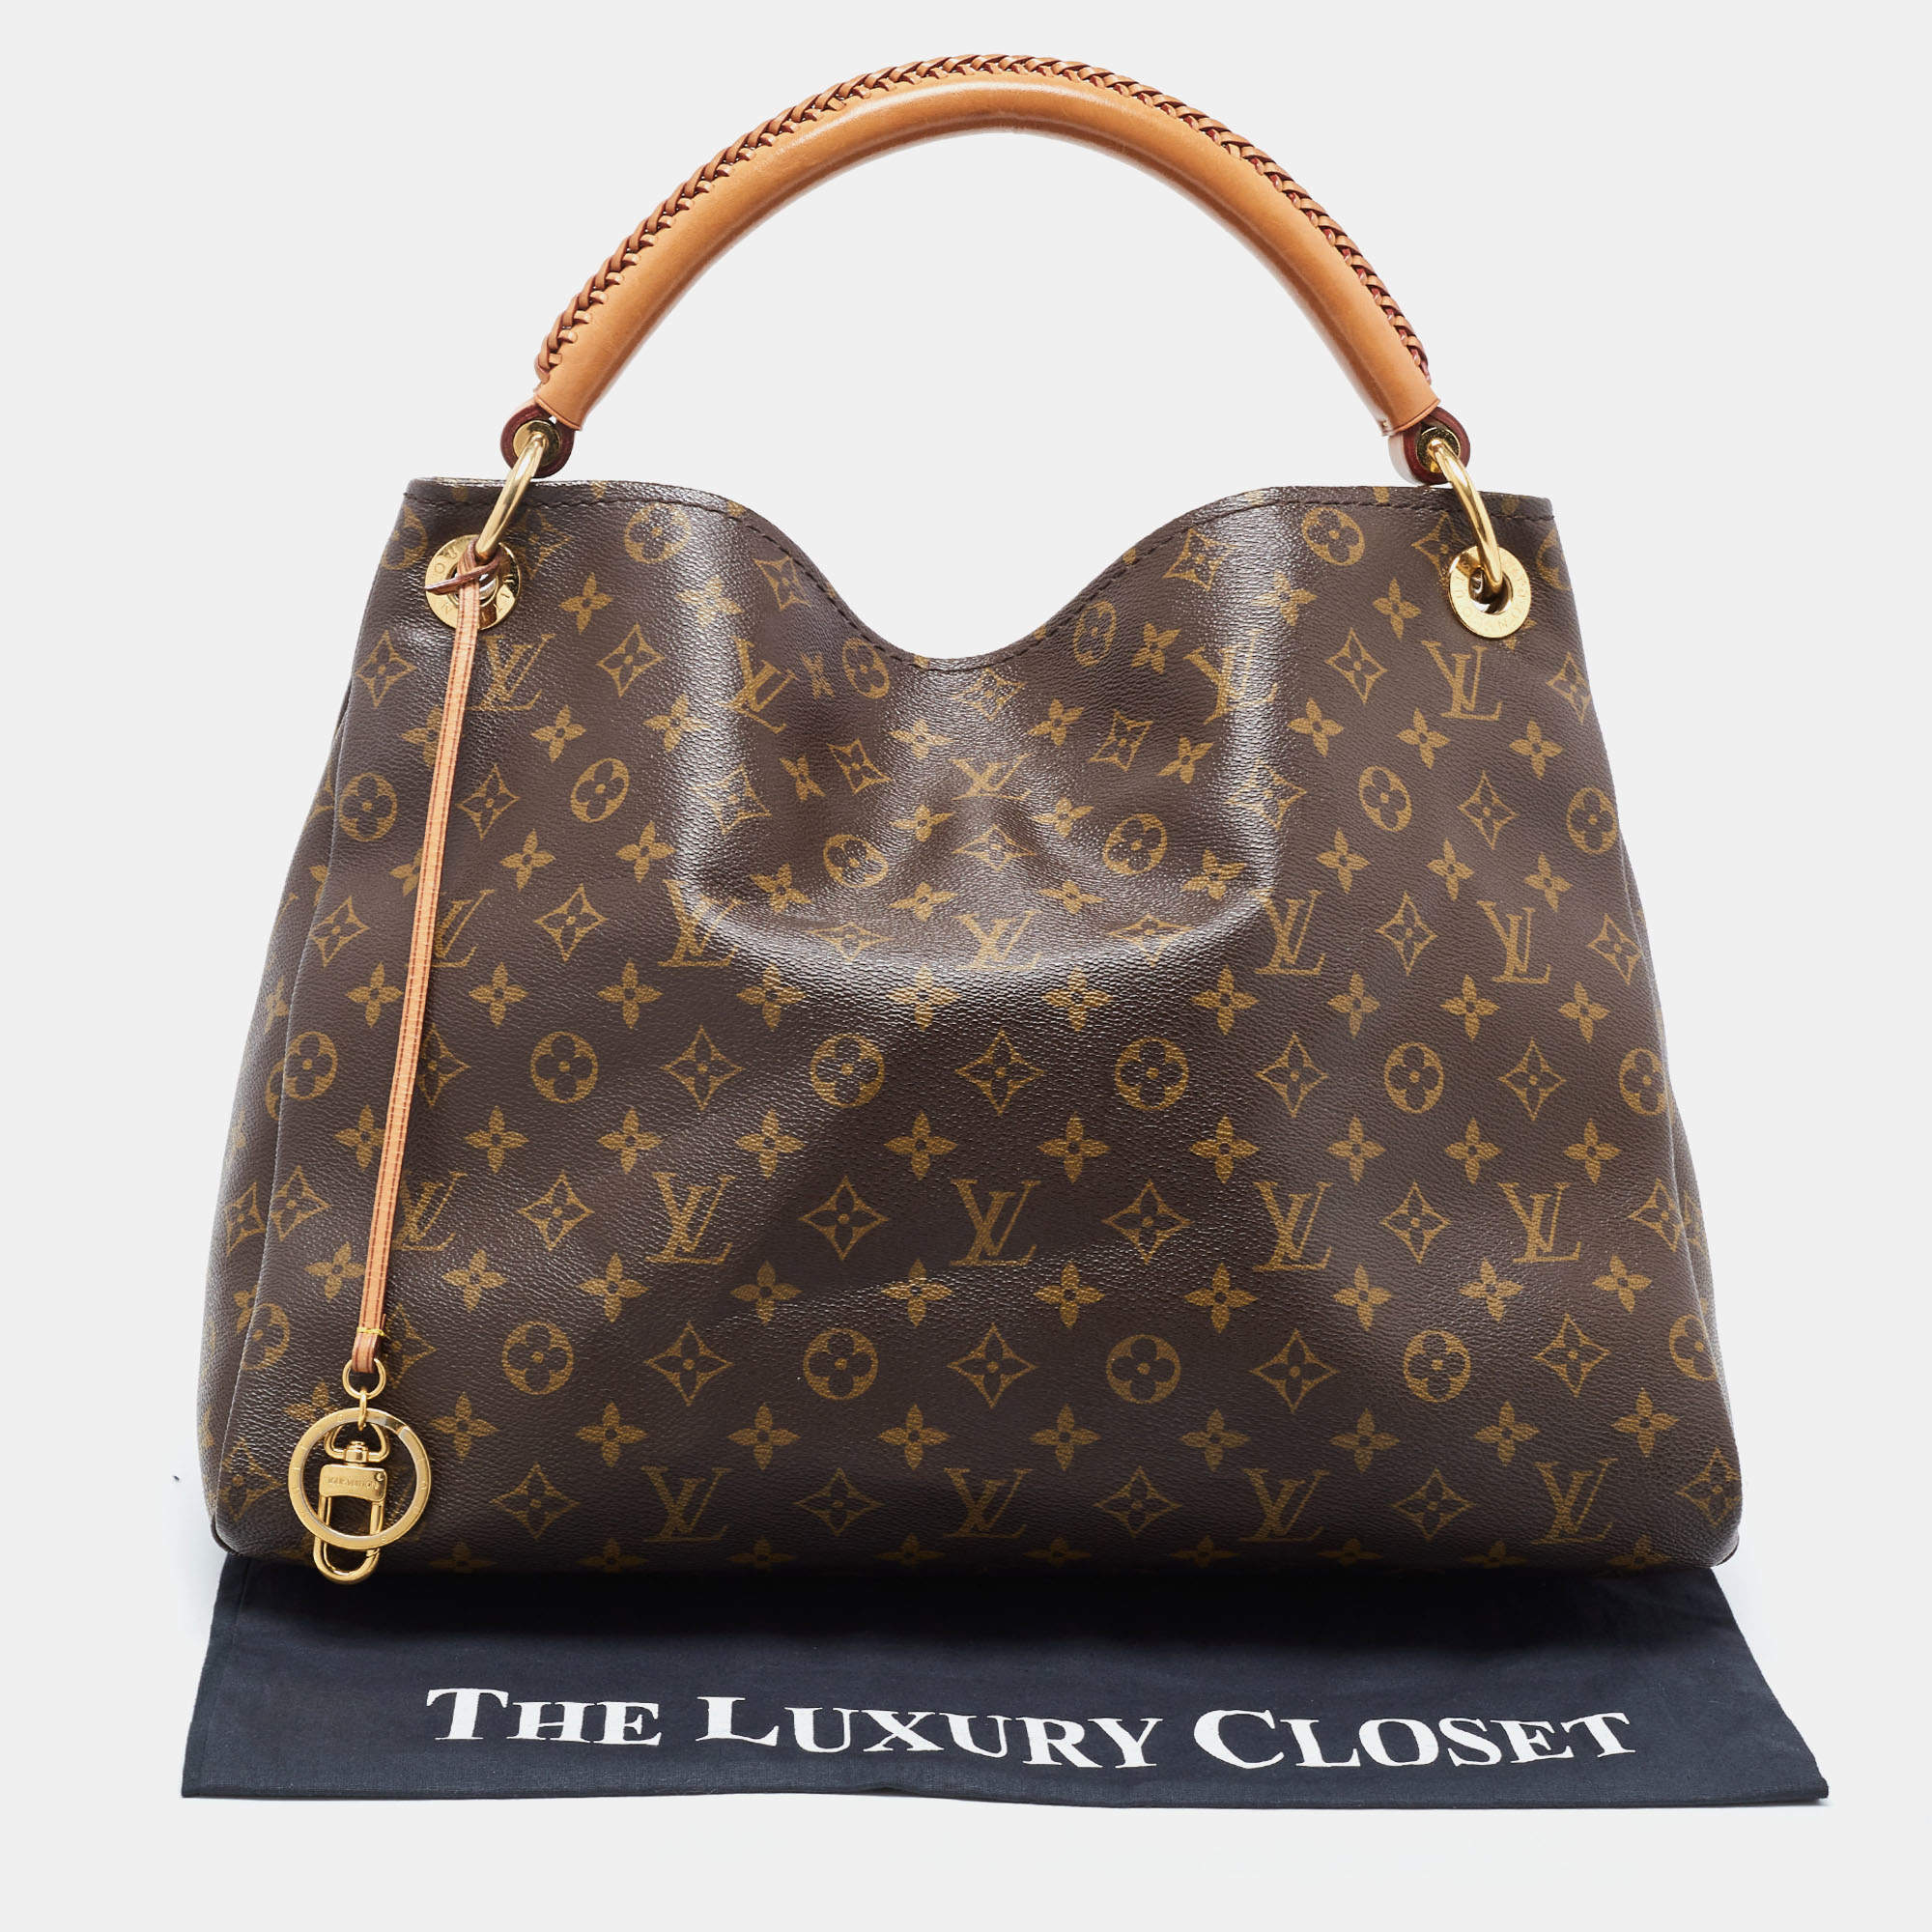 Authentic Louis Vuitton Artsy Damier Azur Hobo Shopper Handbag Bag